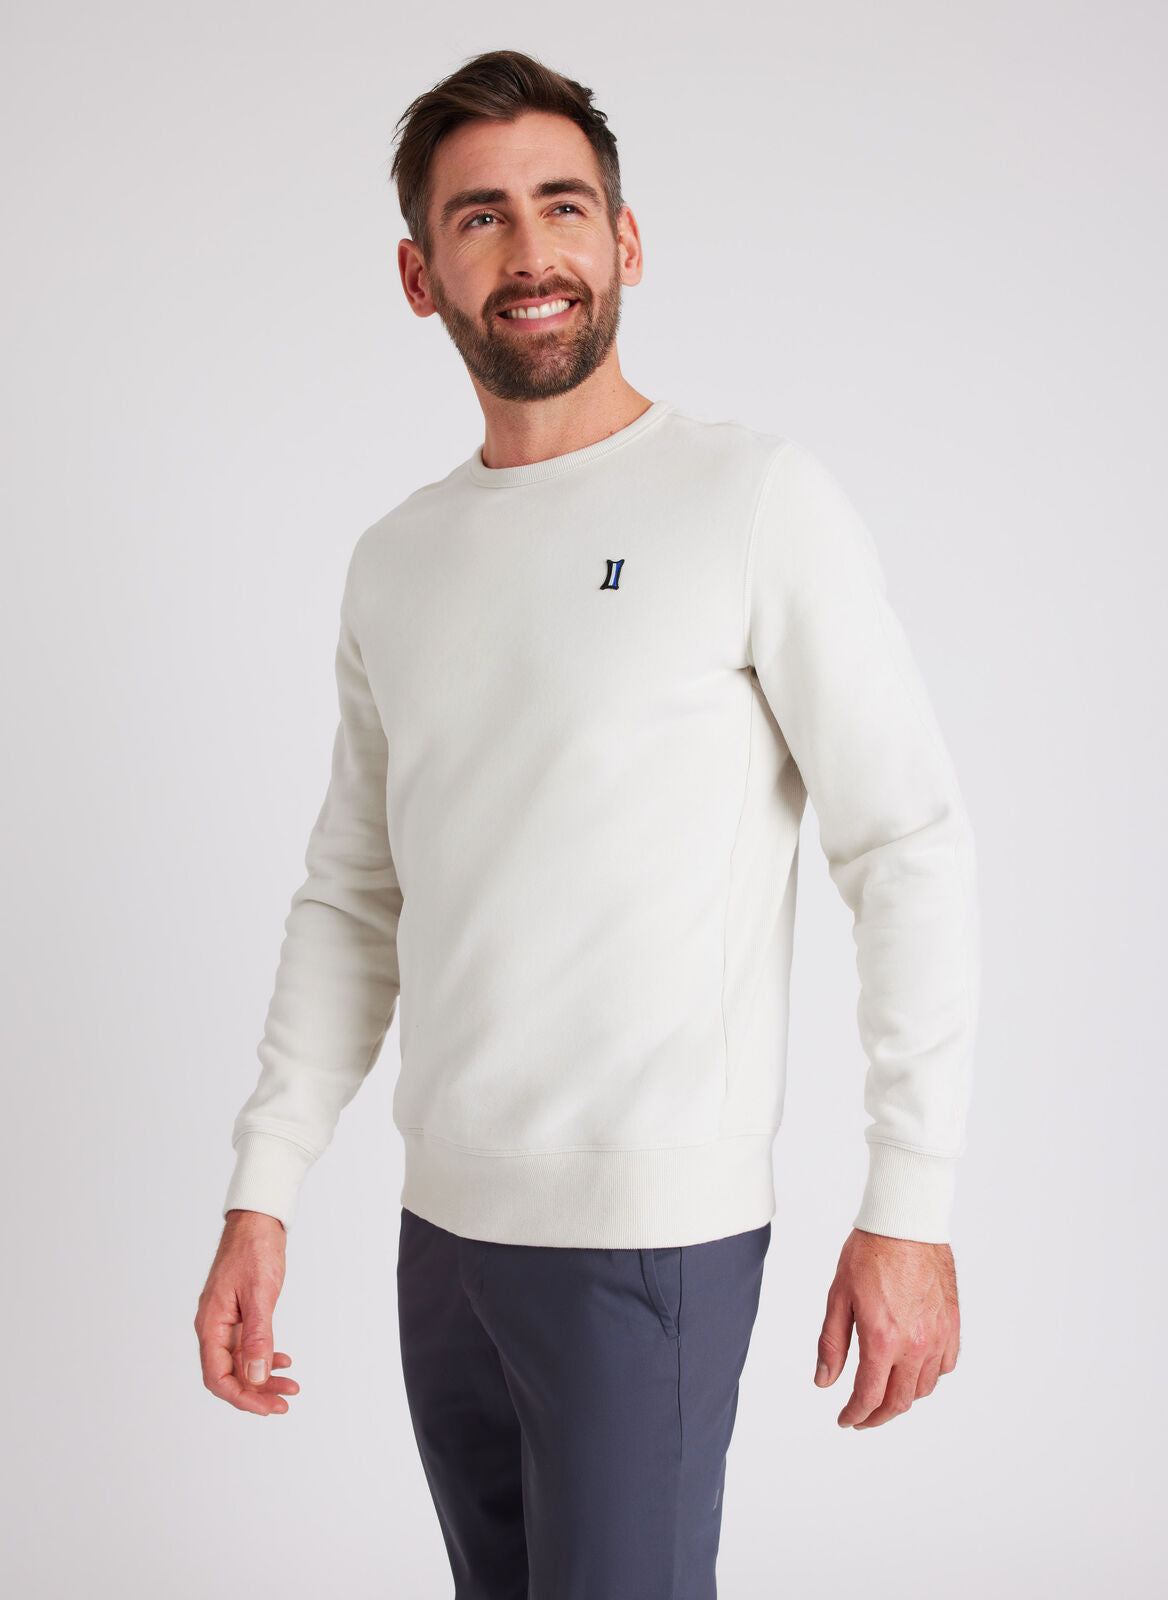 Kit and Ace — Radiance Sweatshirt